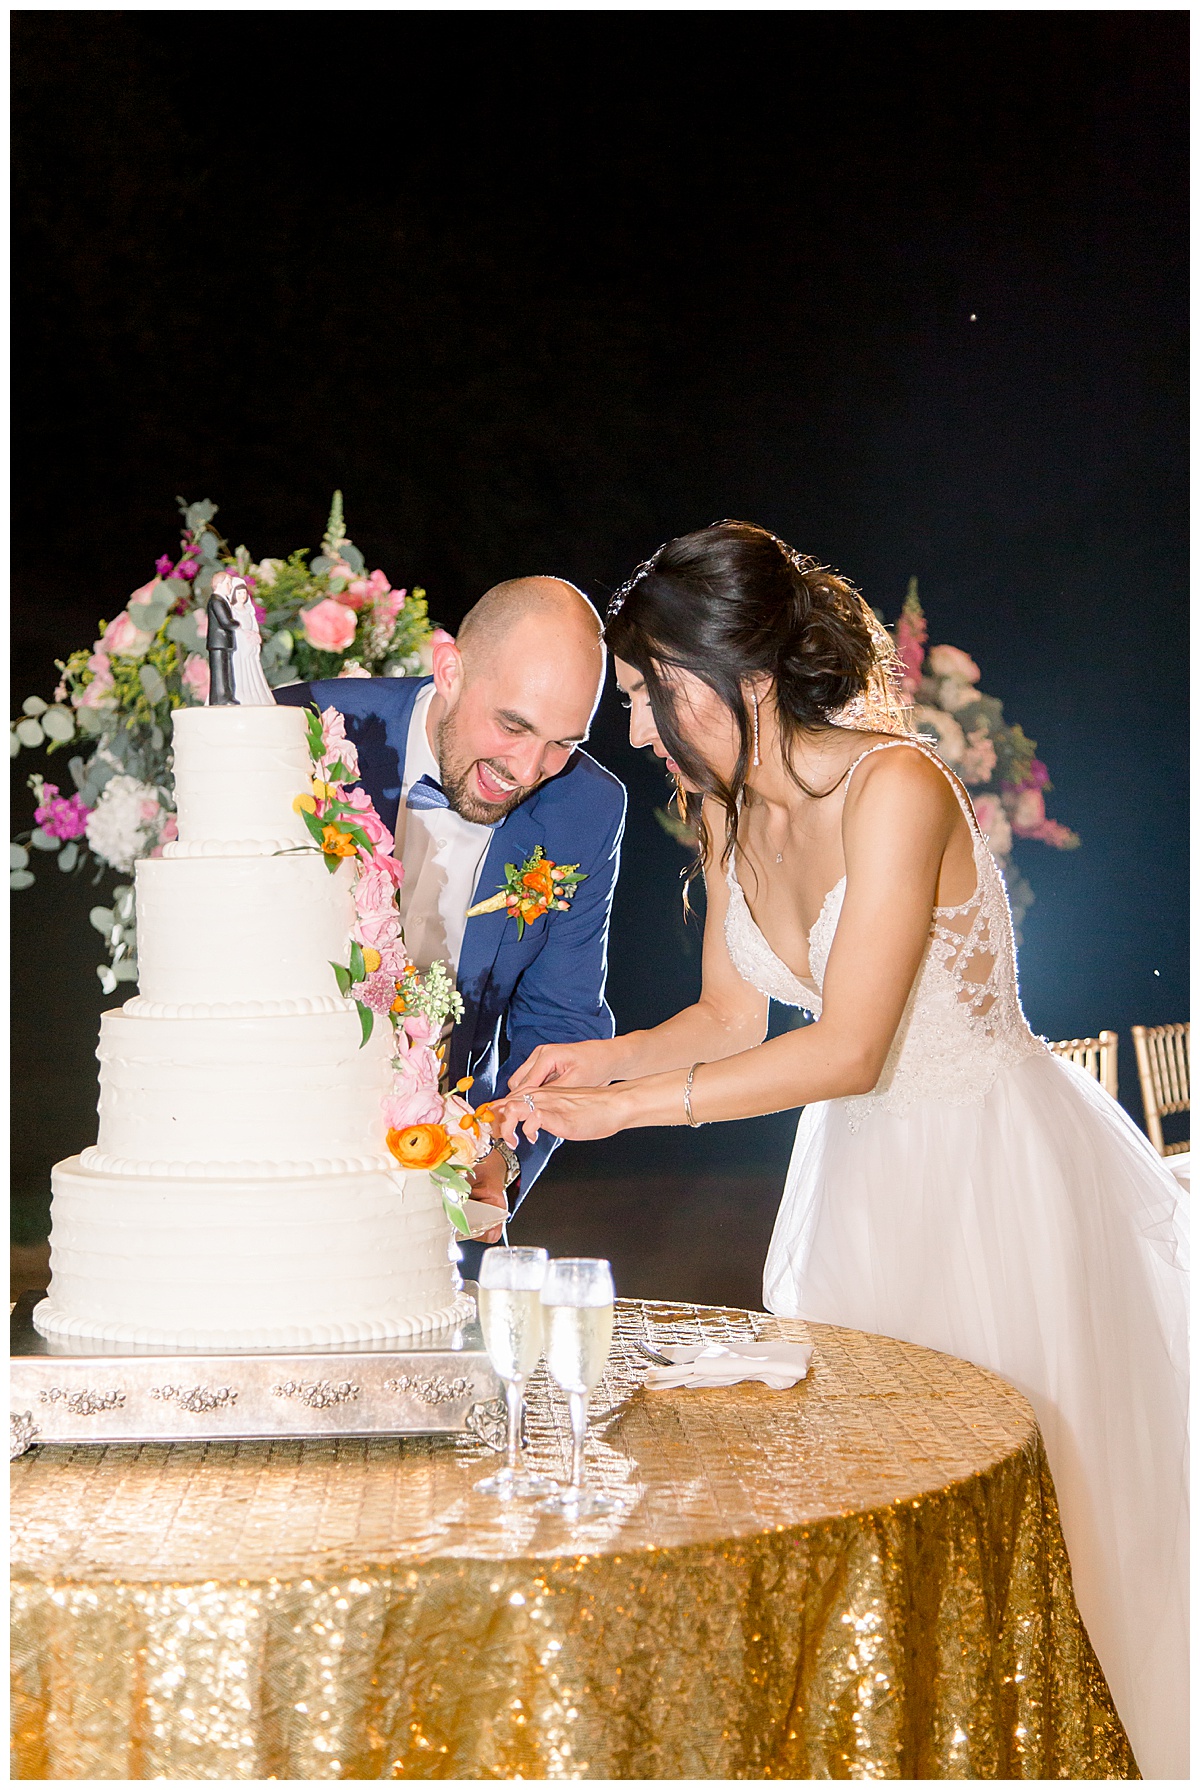 Bride and groom cut cake at Hyatt Regency Hill Country Resort Wedding in San Antonio, TX | San Antonio Wedding photographer| Destination Wedding Photographer| Monica Roberts Photography | monicaroberts.com